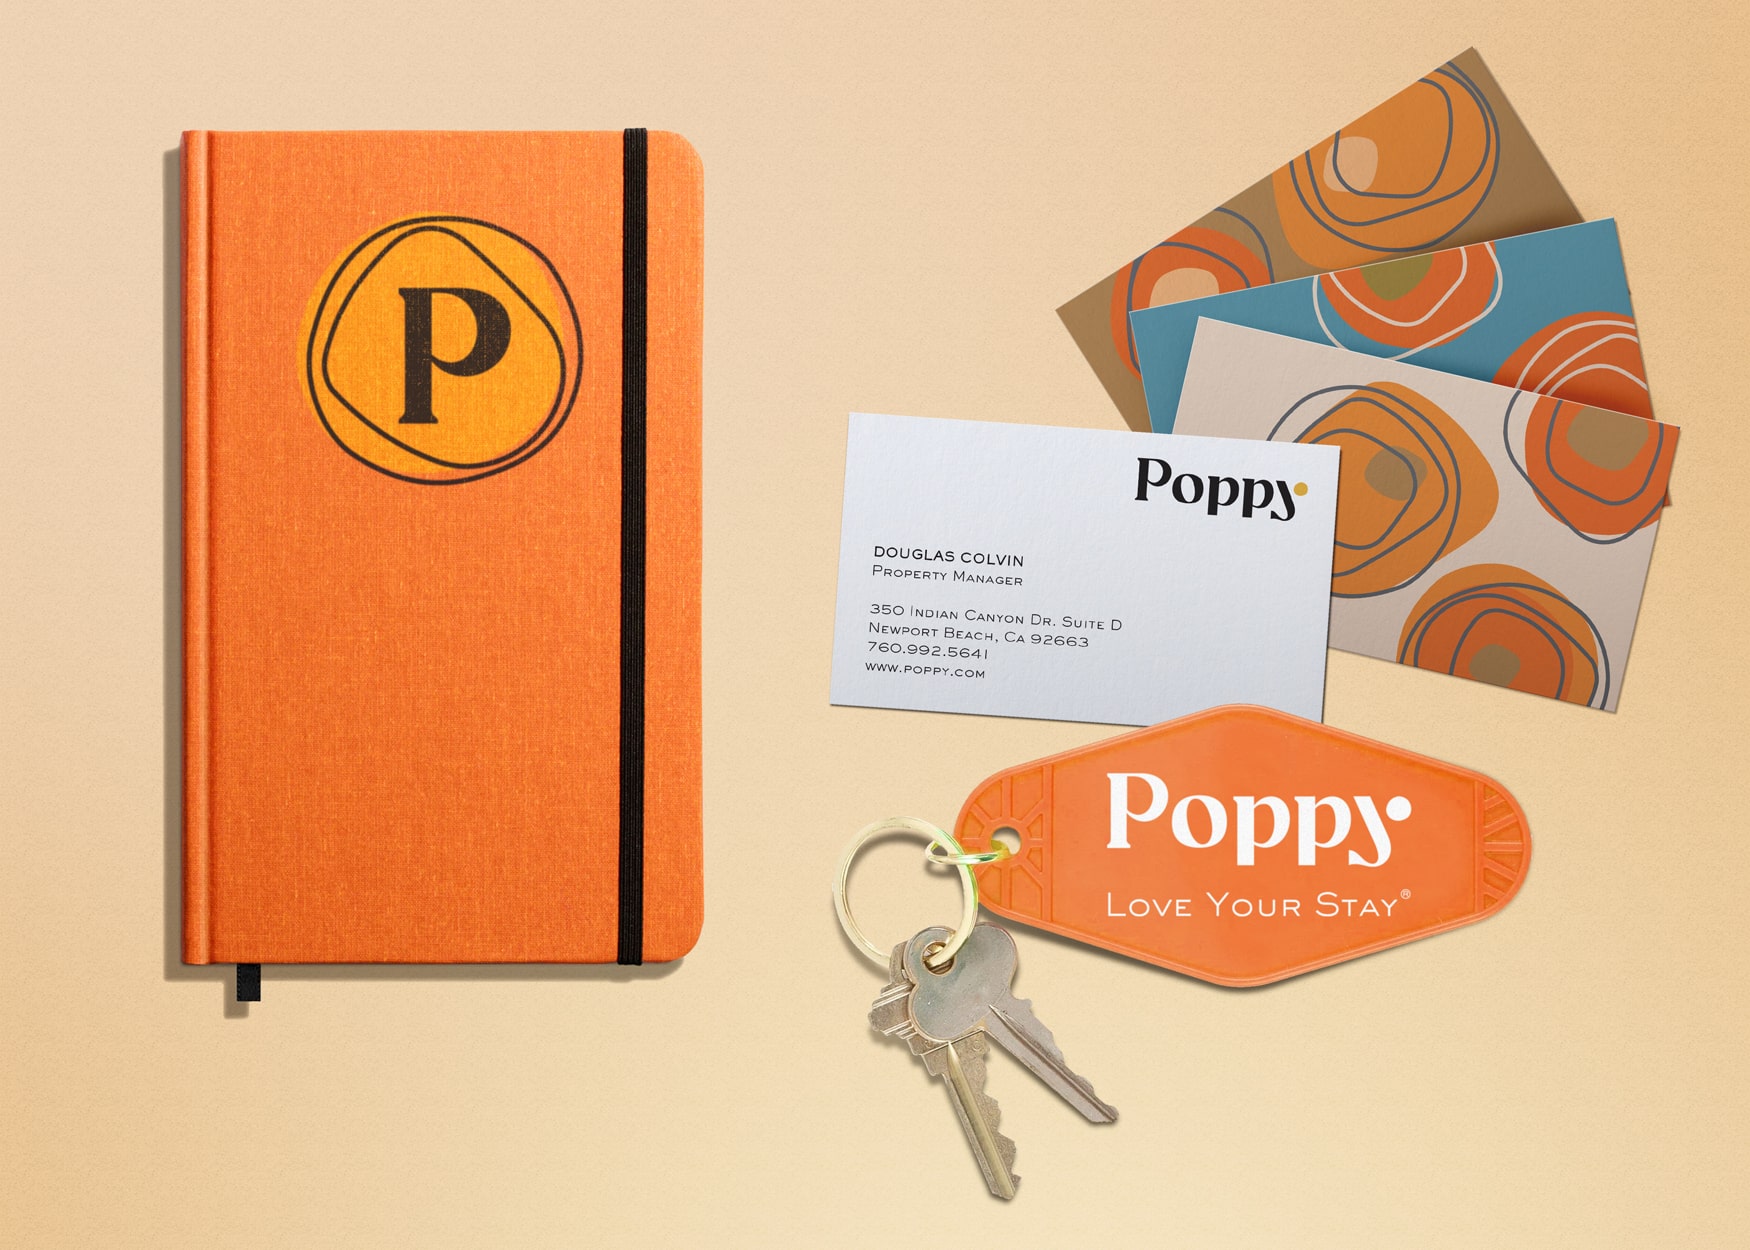 Poppy's business card mockup created by Flux rebranding creative agency in LA